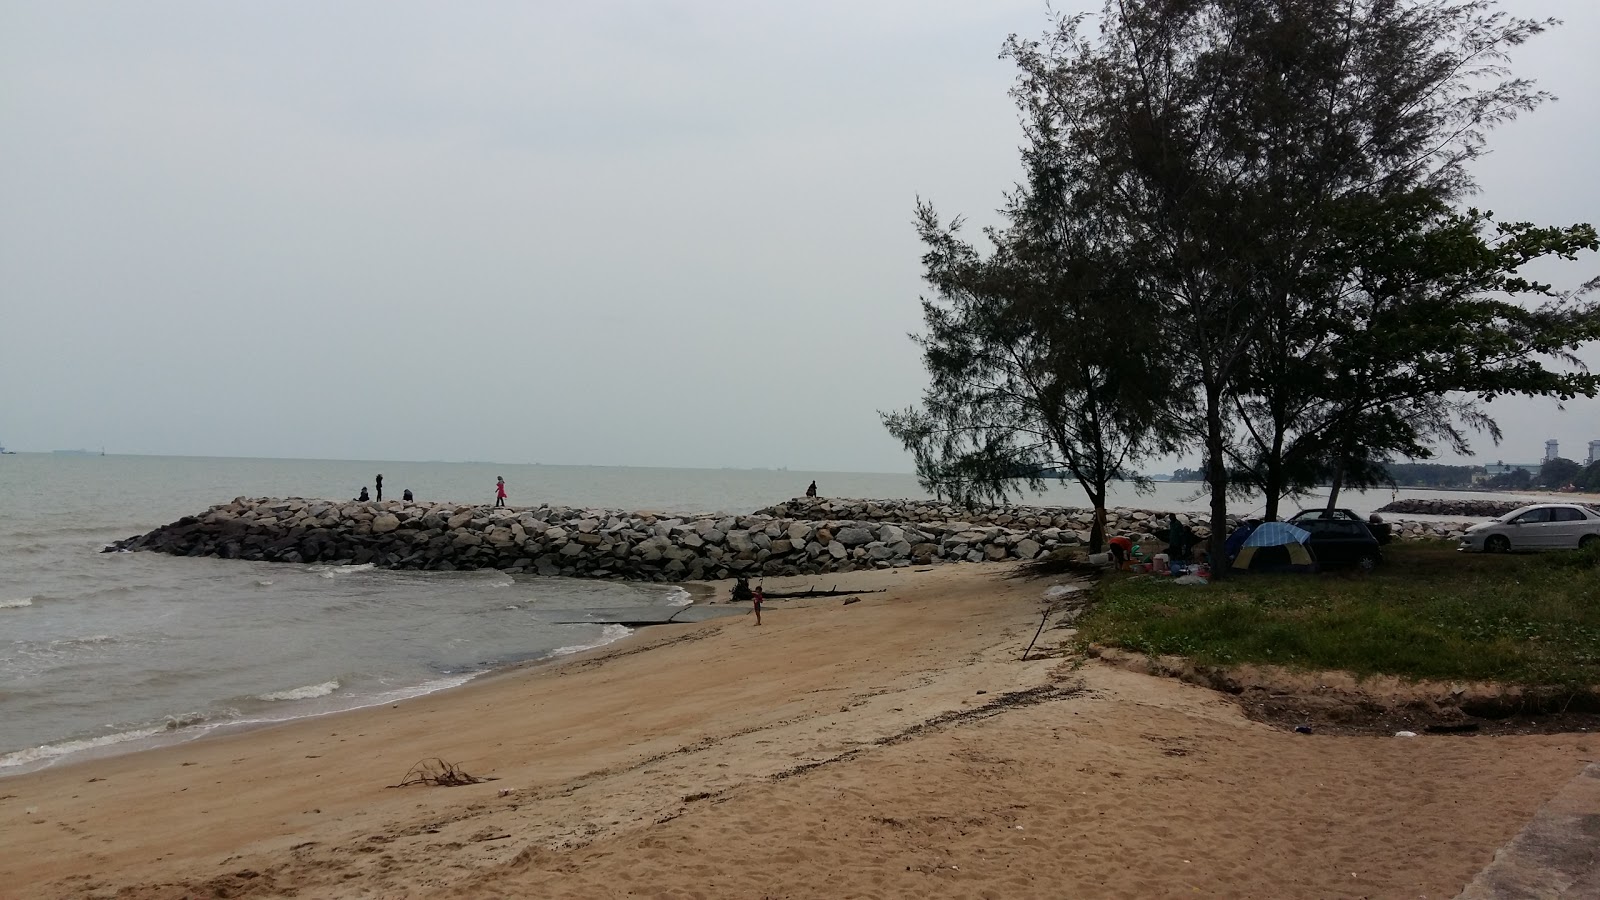 Zdjęcie Sg. Tuang Beach obszar udogodnień